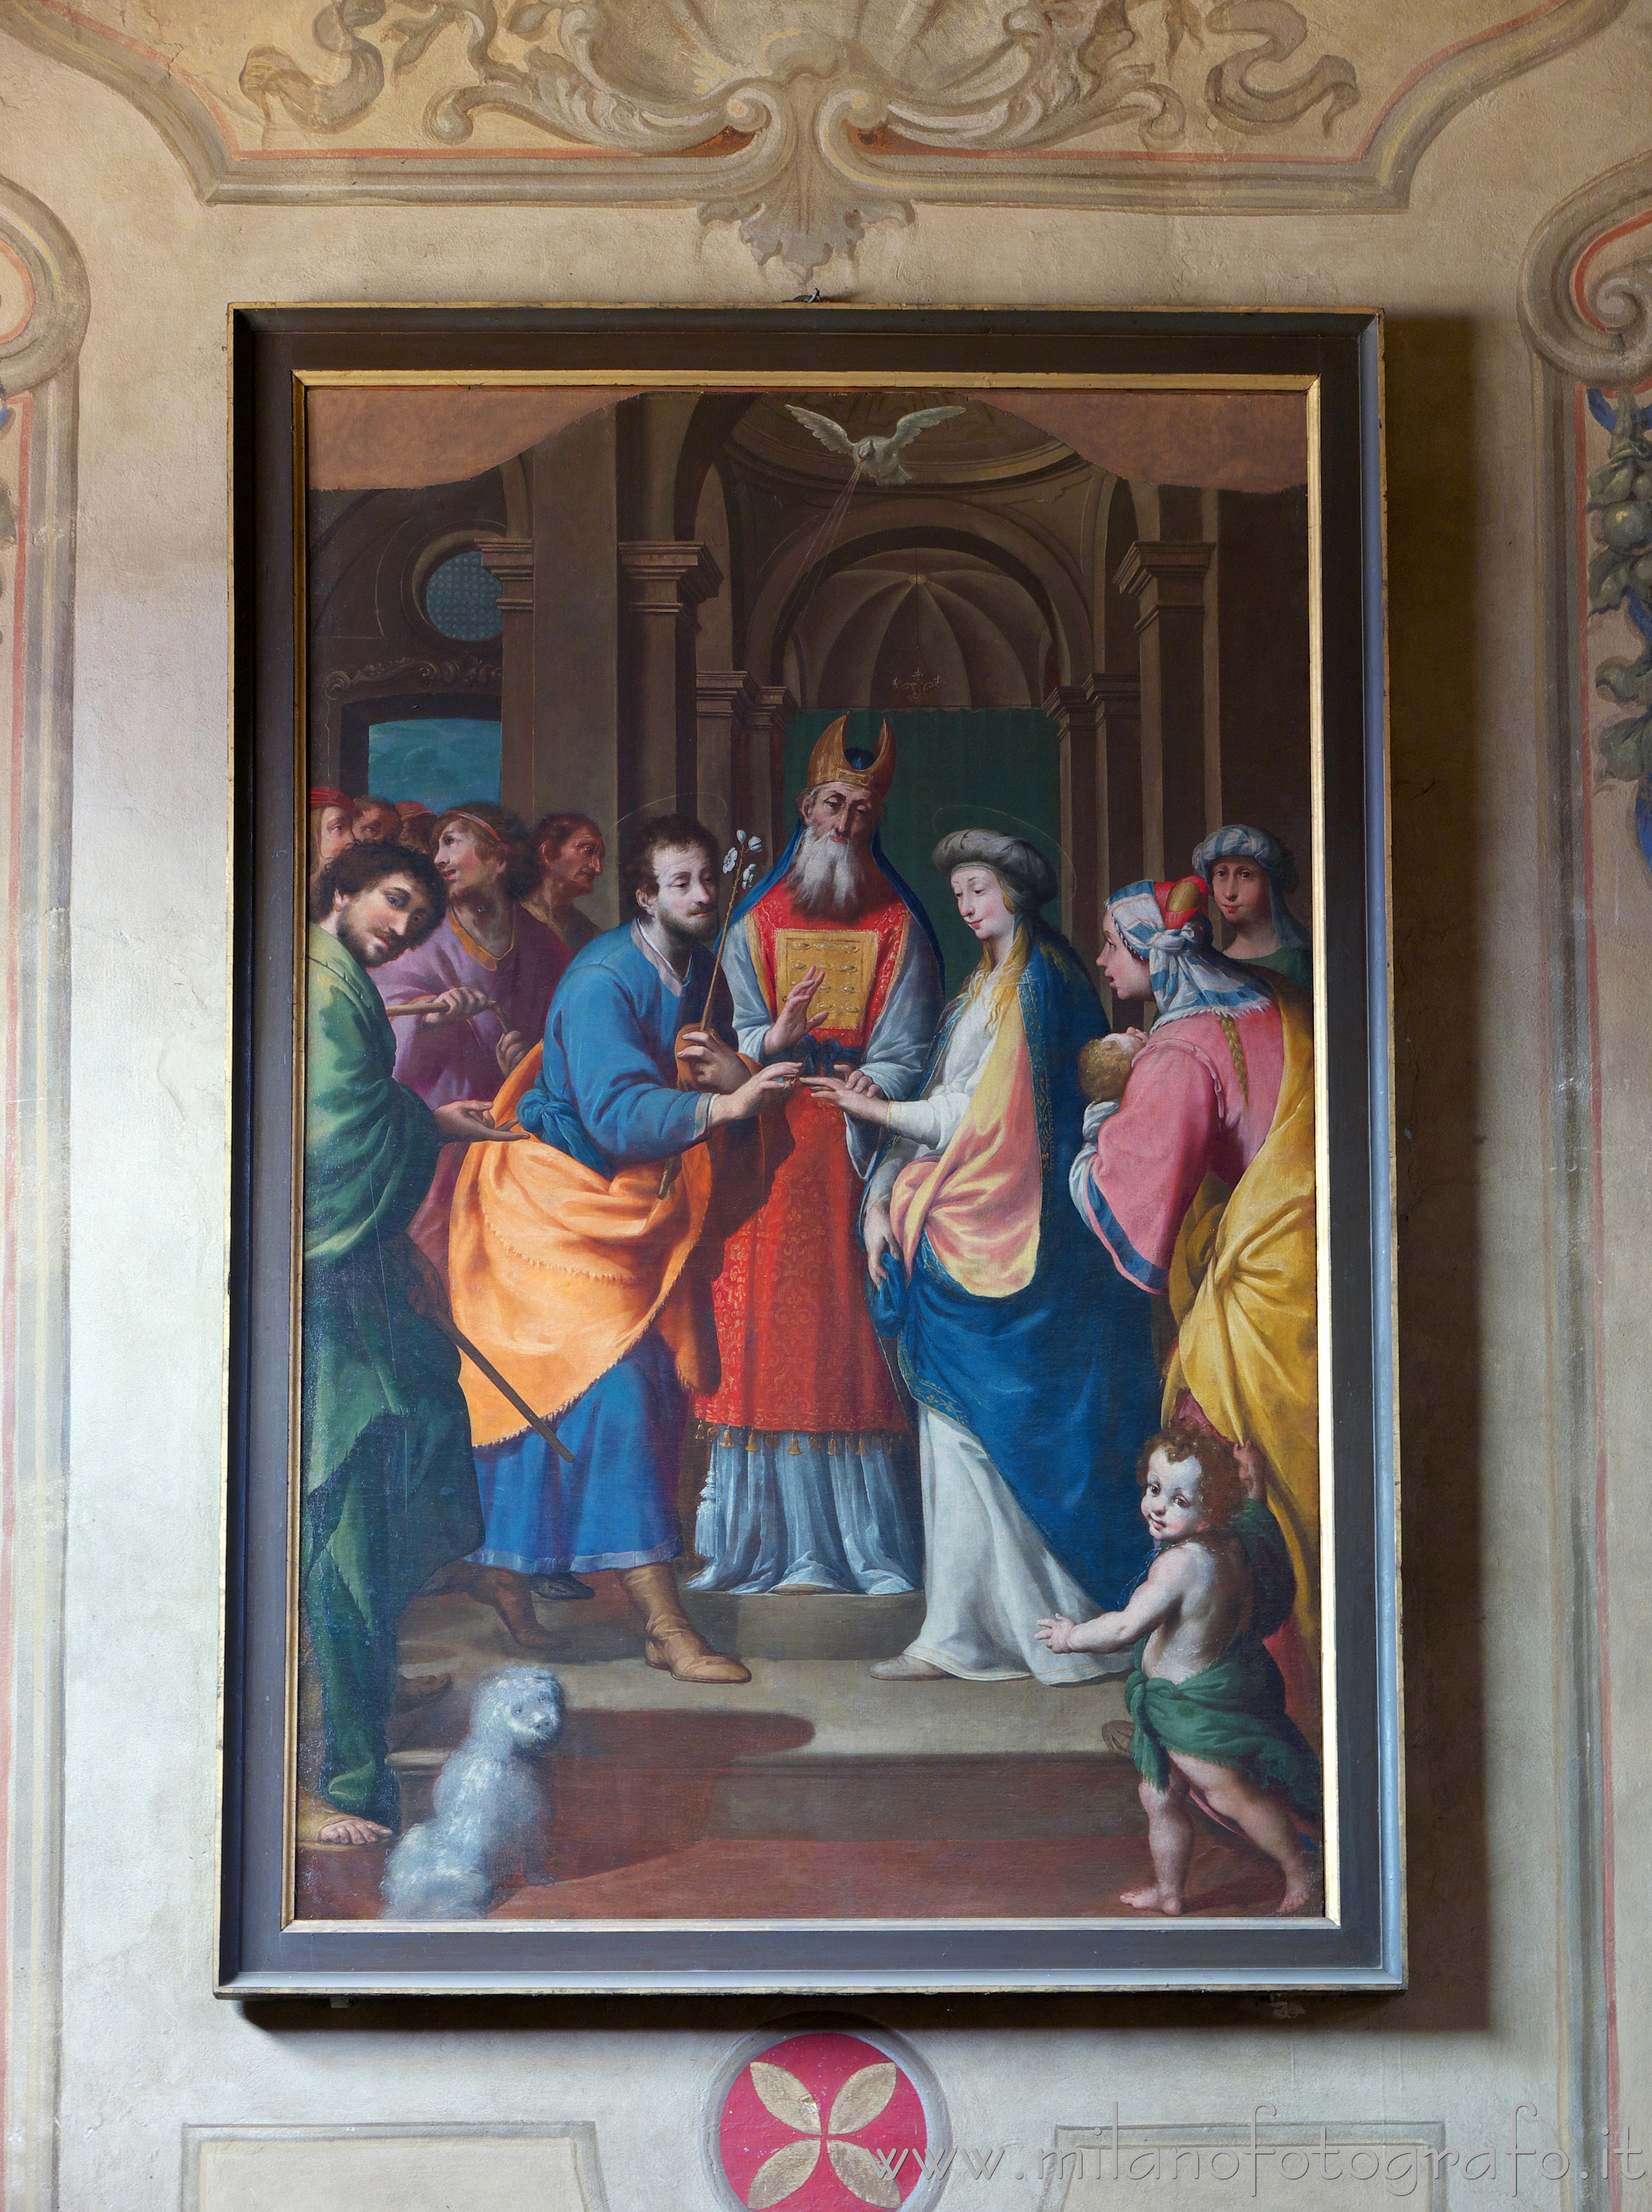 Monza (Monza e Brianza, Italy): Marriage of the Virgin by Riccardo de Tavolini in the Church of Santa Maria di Carrobiolo - Monza (Monza e Brianza, Italy)